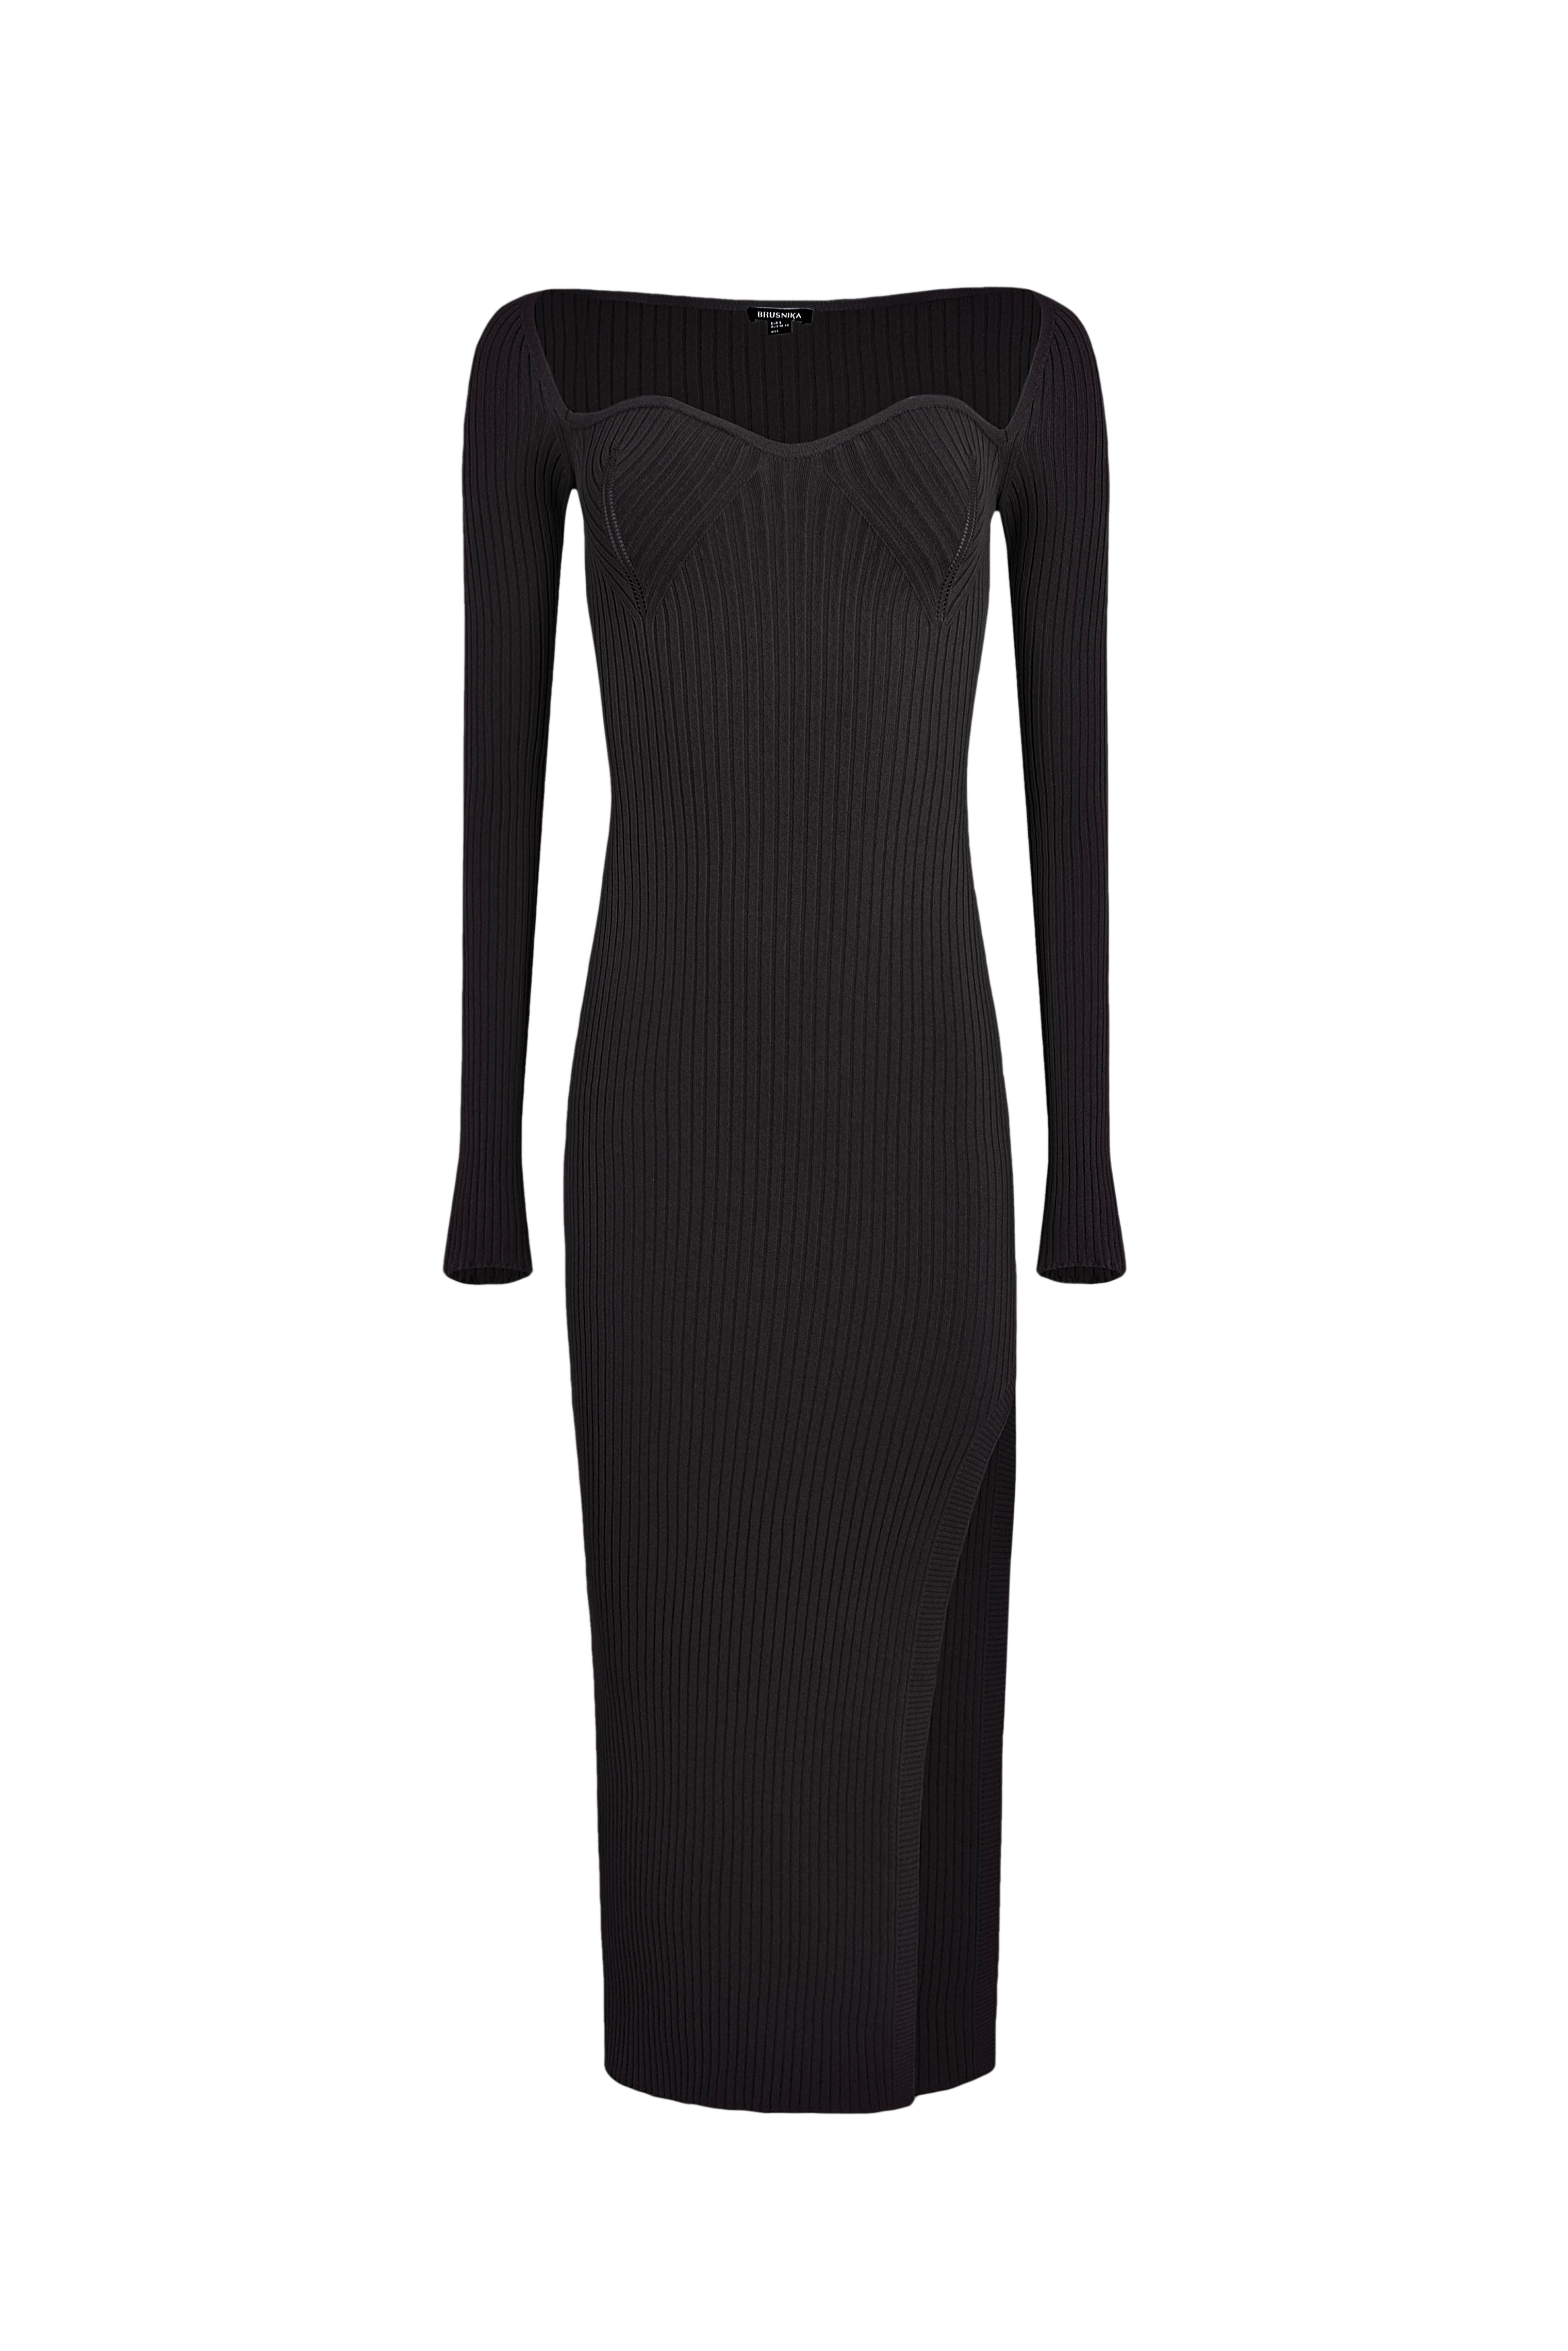 Dress 3695-01 Black from BRUSNiKA